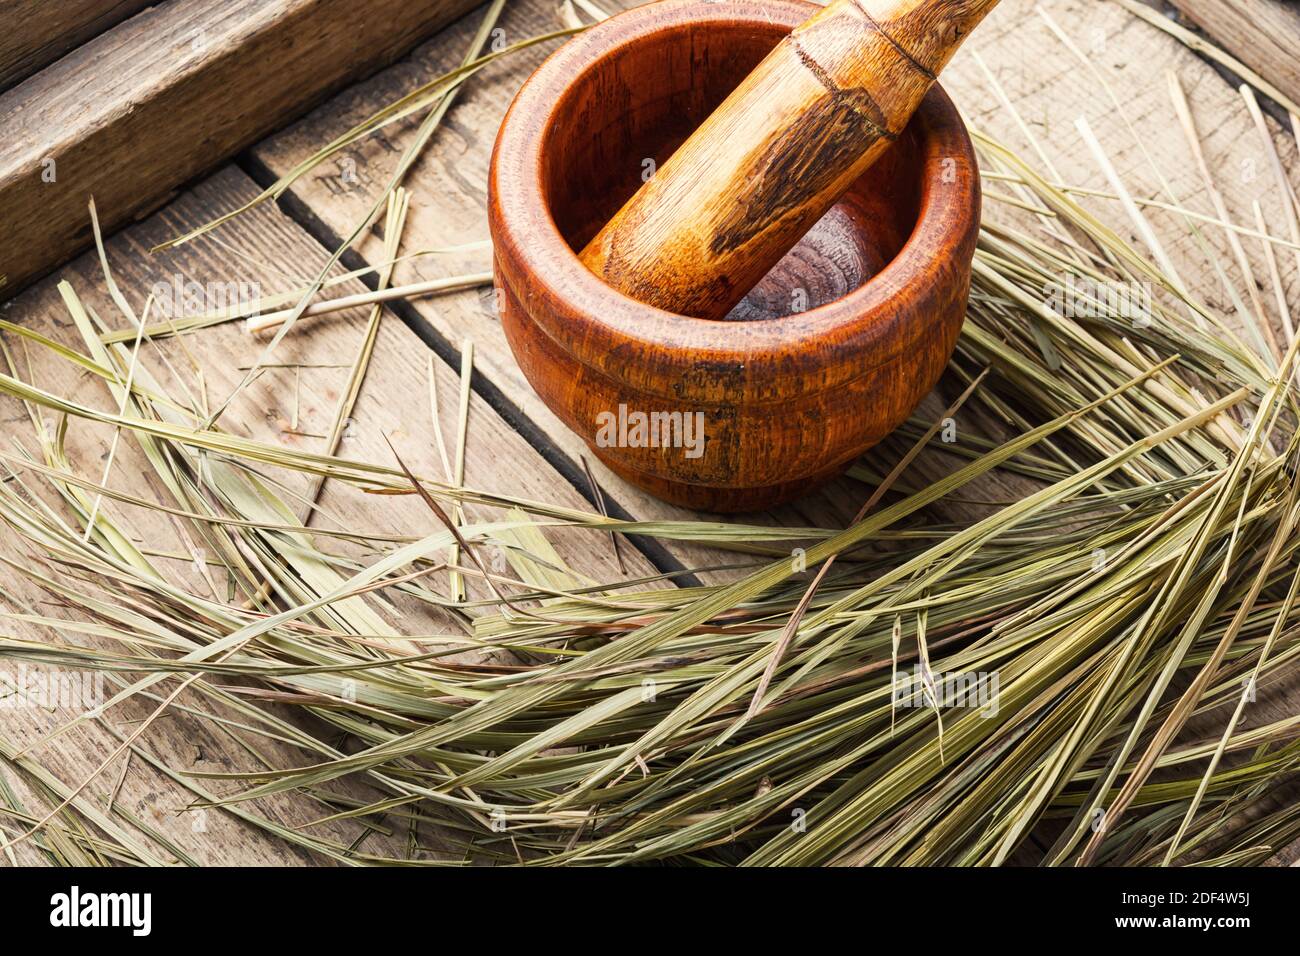 Mortar with medicinal herb holy grass.Herbal medicine.Alternative medicine concept Stock Photo